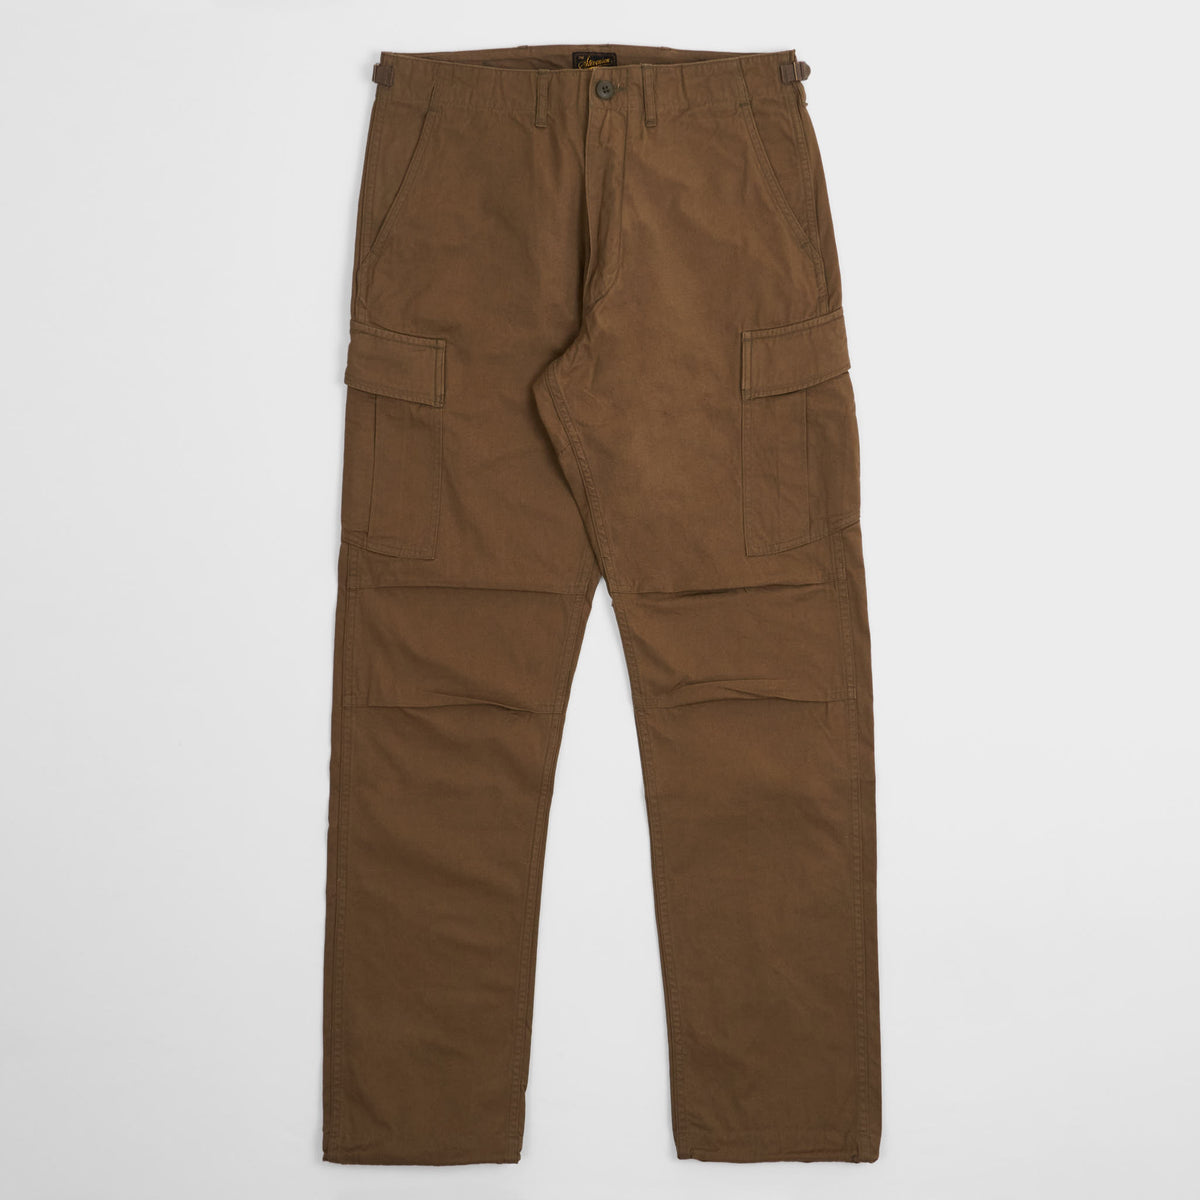 Stevenson Overall CO. Military Cargo Fatigue Pants